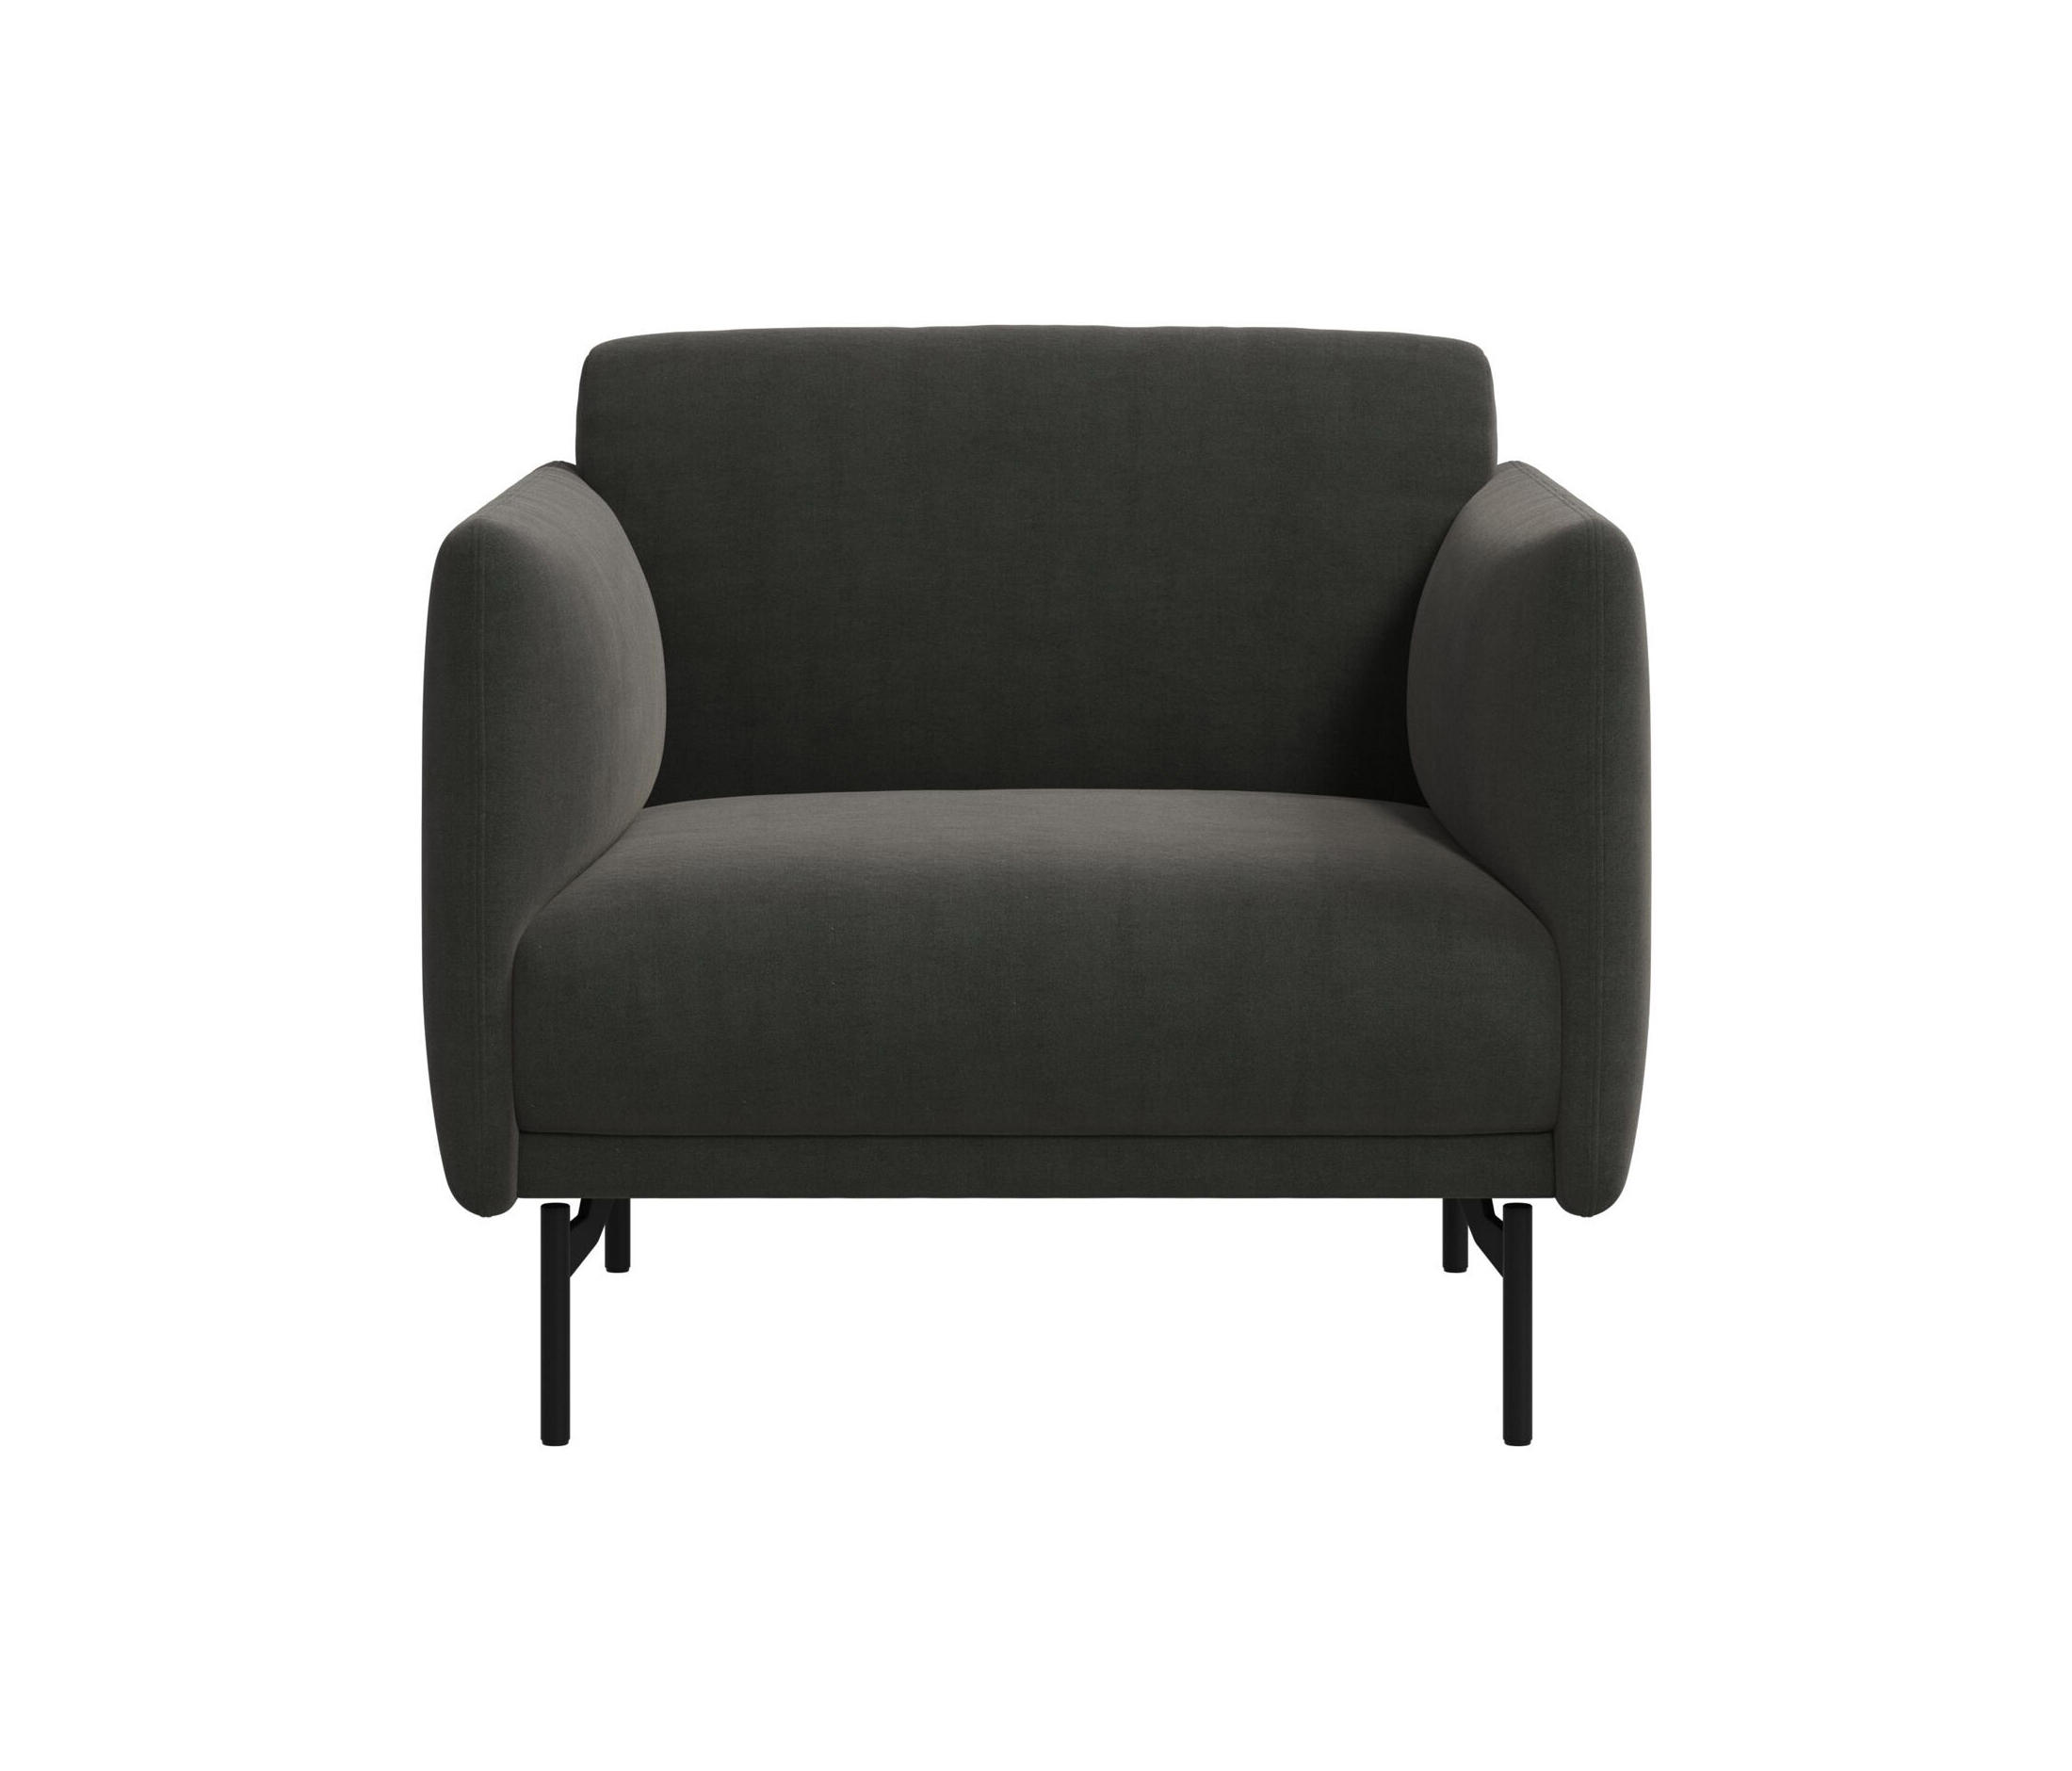 Berne armchair 1001 & designer furniture | Architonic